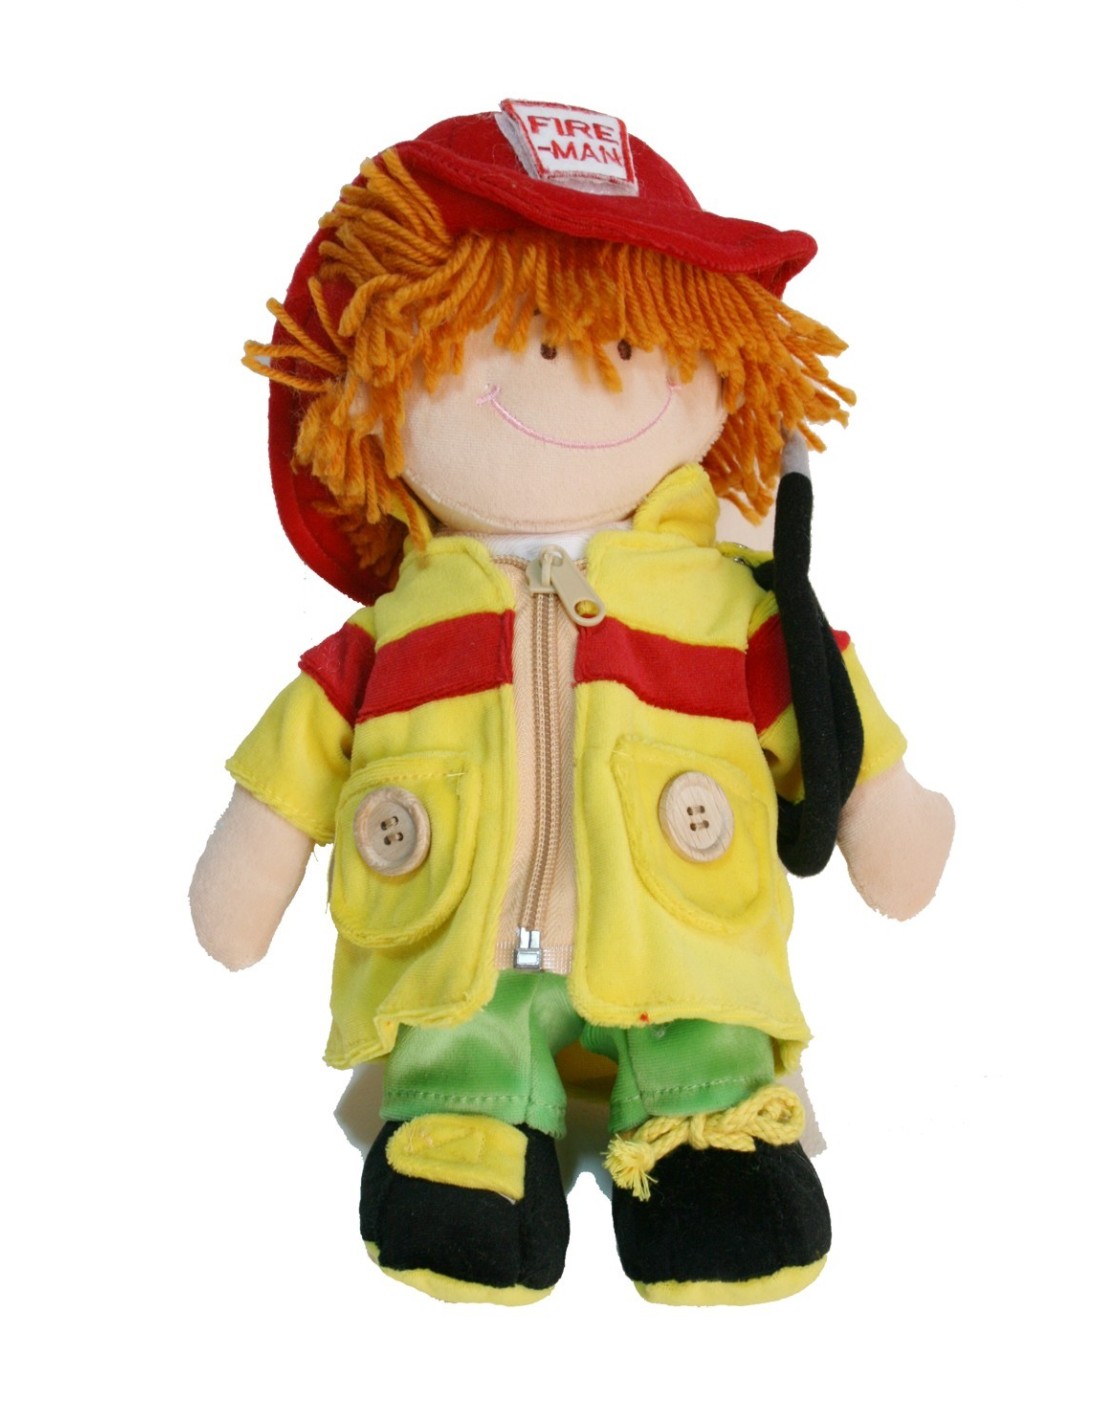 Muñeco de trapo con vestido de profesión bombero